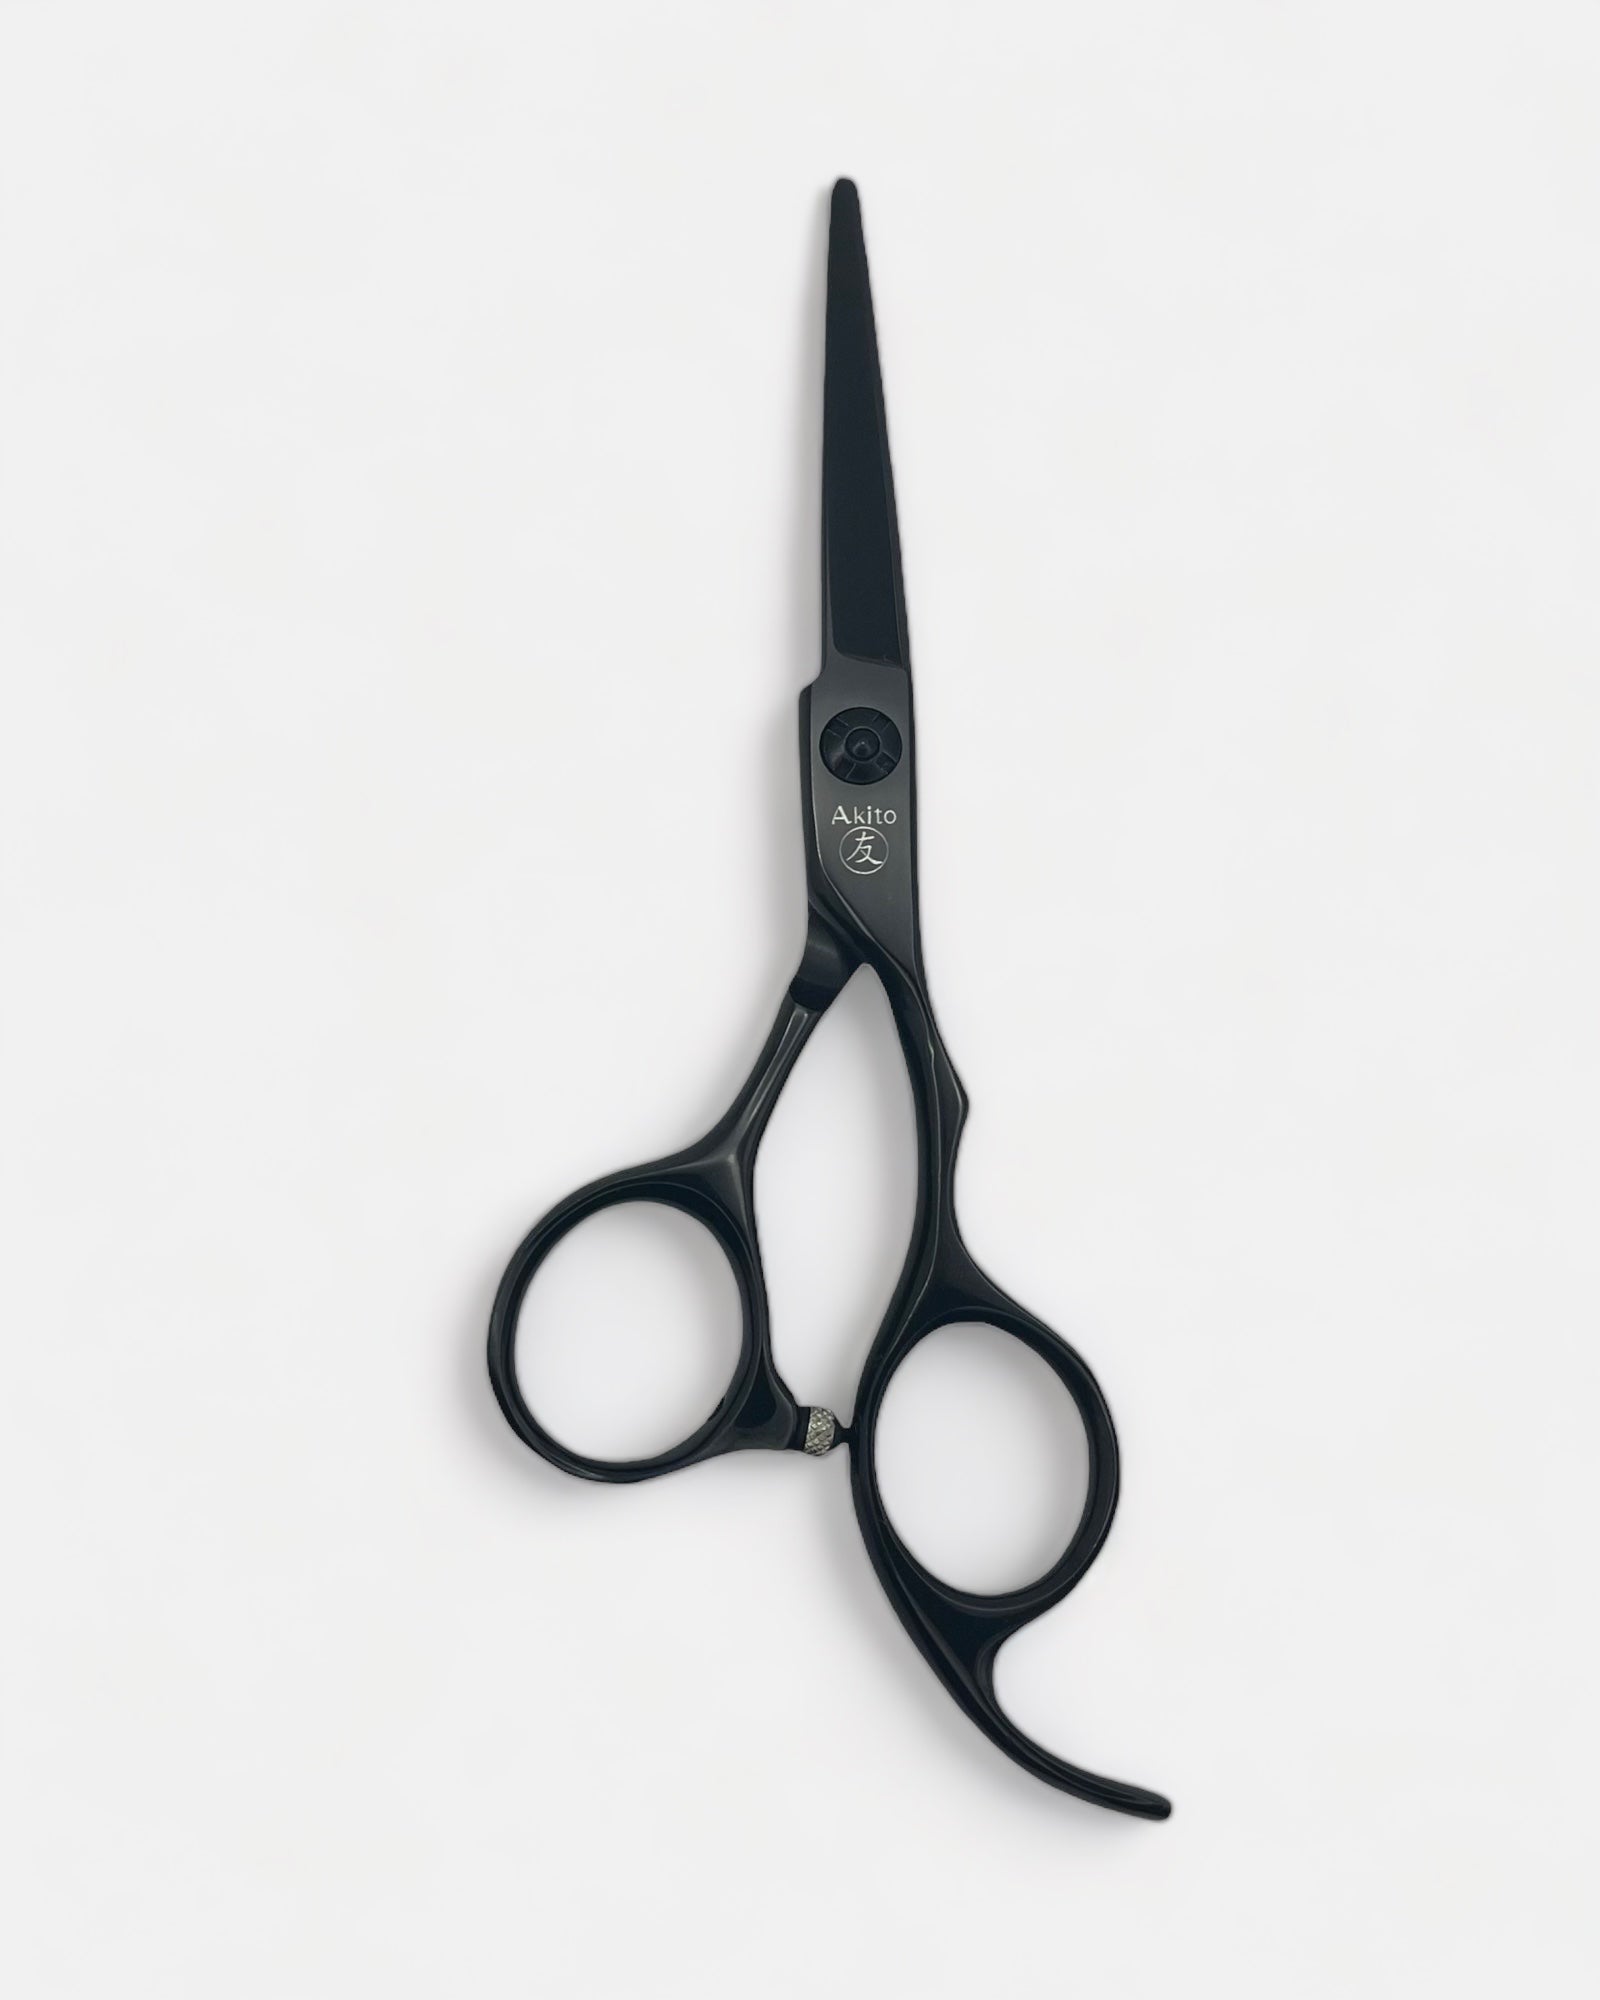 Products - Akito Scissors